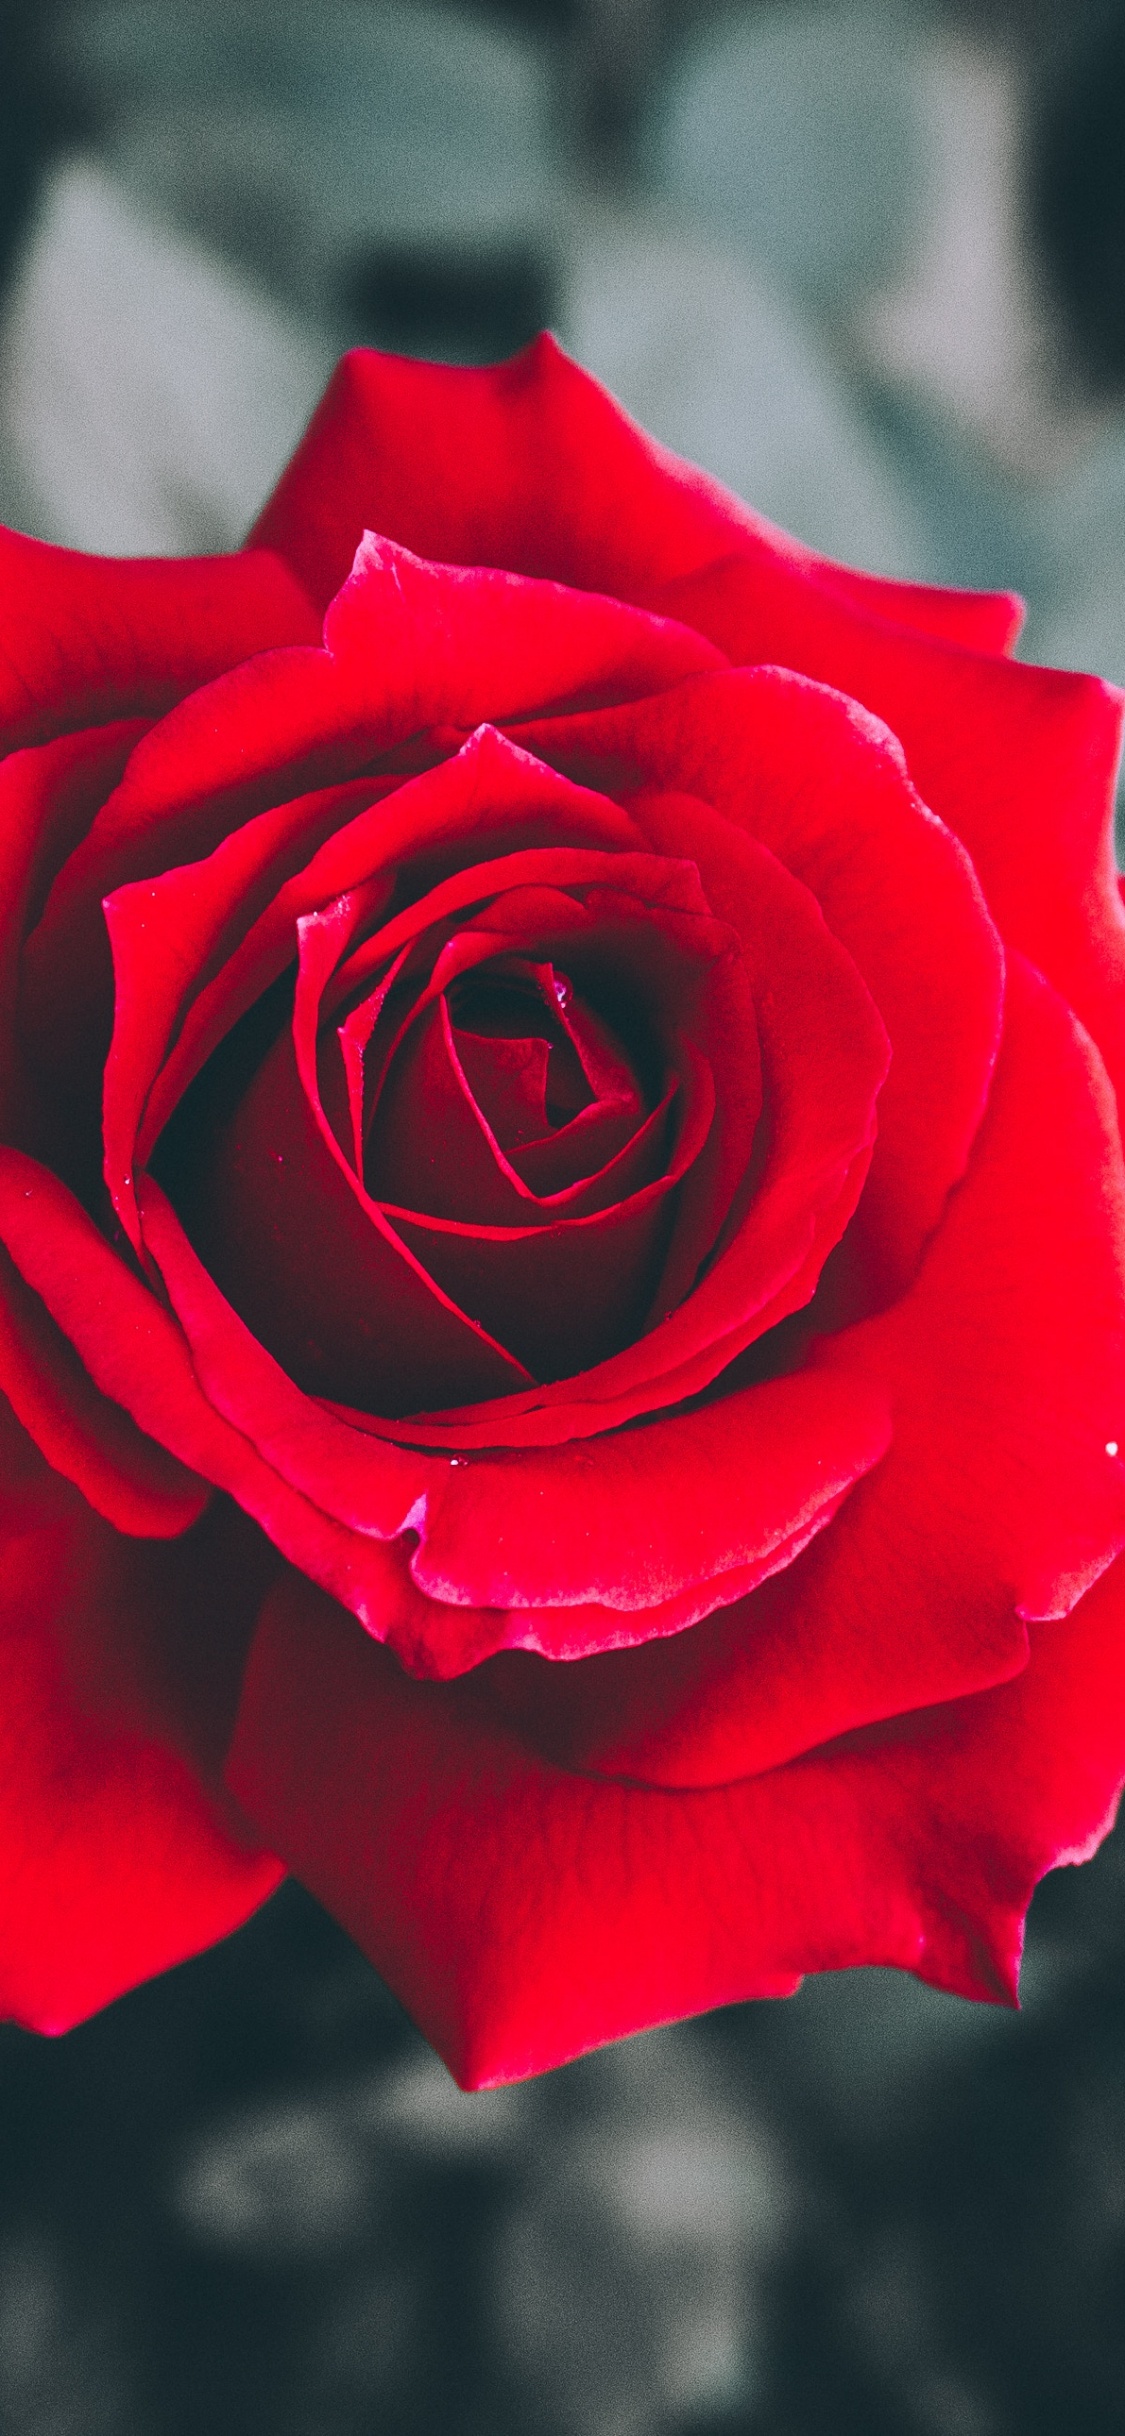 Rose Rouge en Fleur en Photographie Rapprochée. Wallpaper in 1125x2436 Resolution